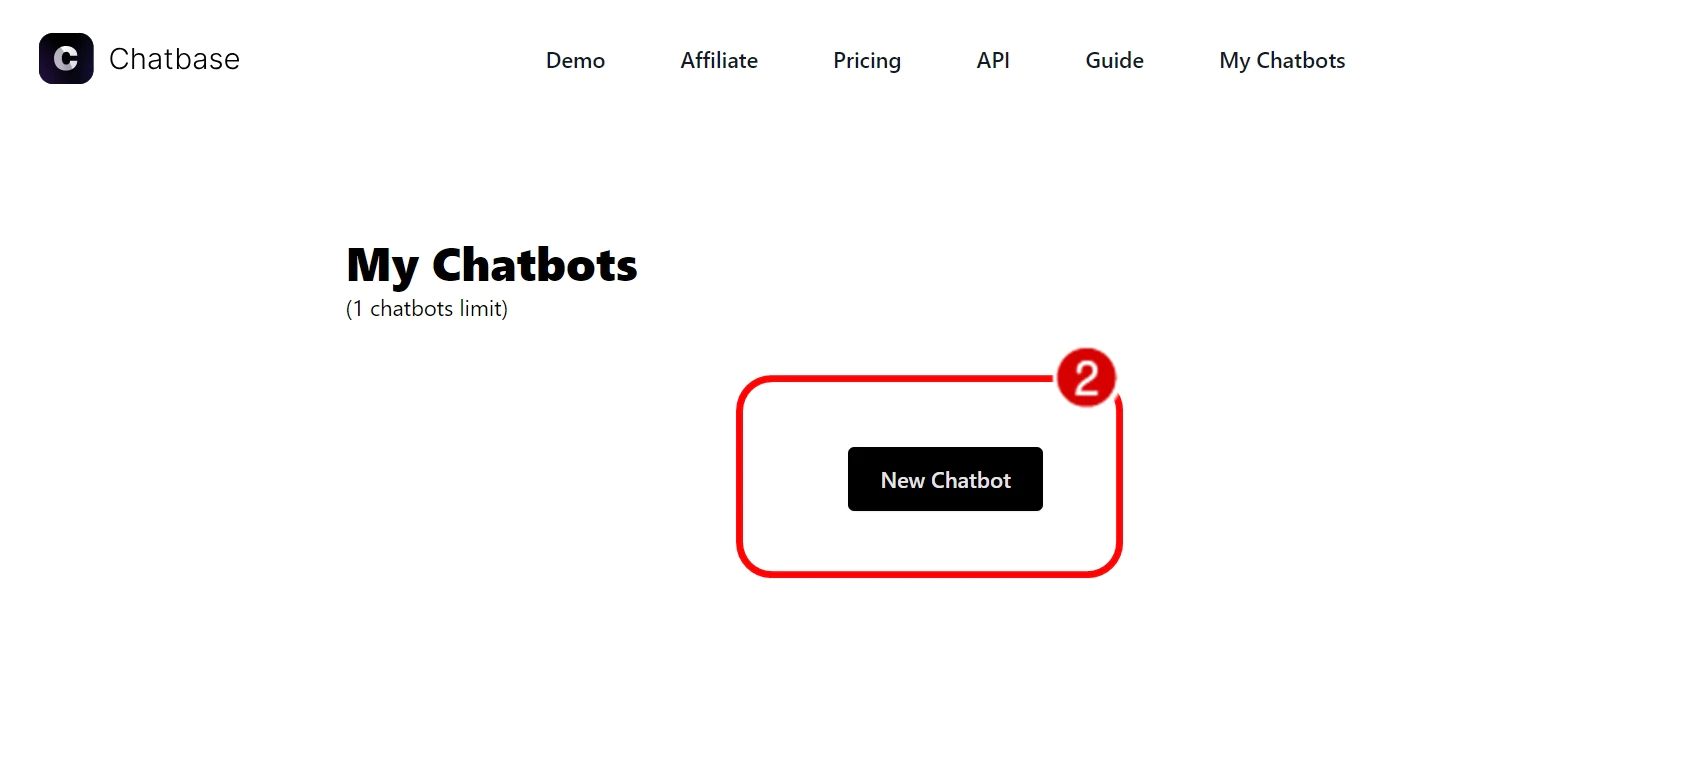 How to create ai by pdf doc txt chatbase 9 | AI | วิธีสร้าง AI ส่วนตัว ช่วยงาน ง่าย ๆ ฟรี! จากไฟล์เอกสาร และ Chatbase